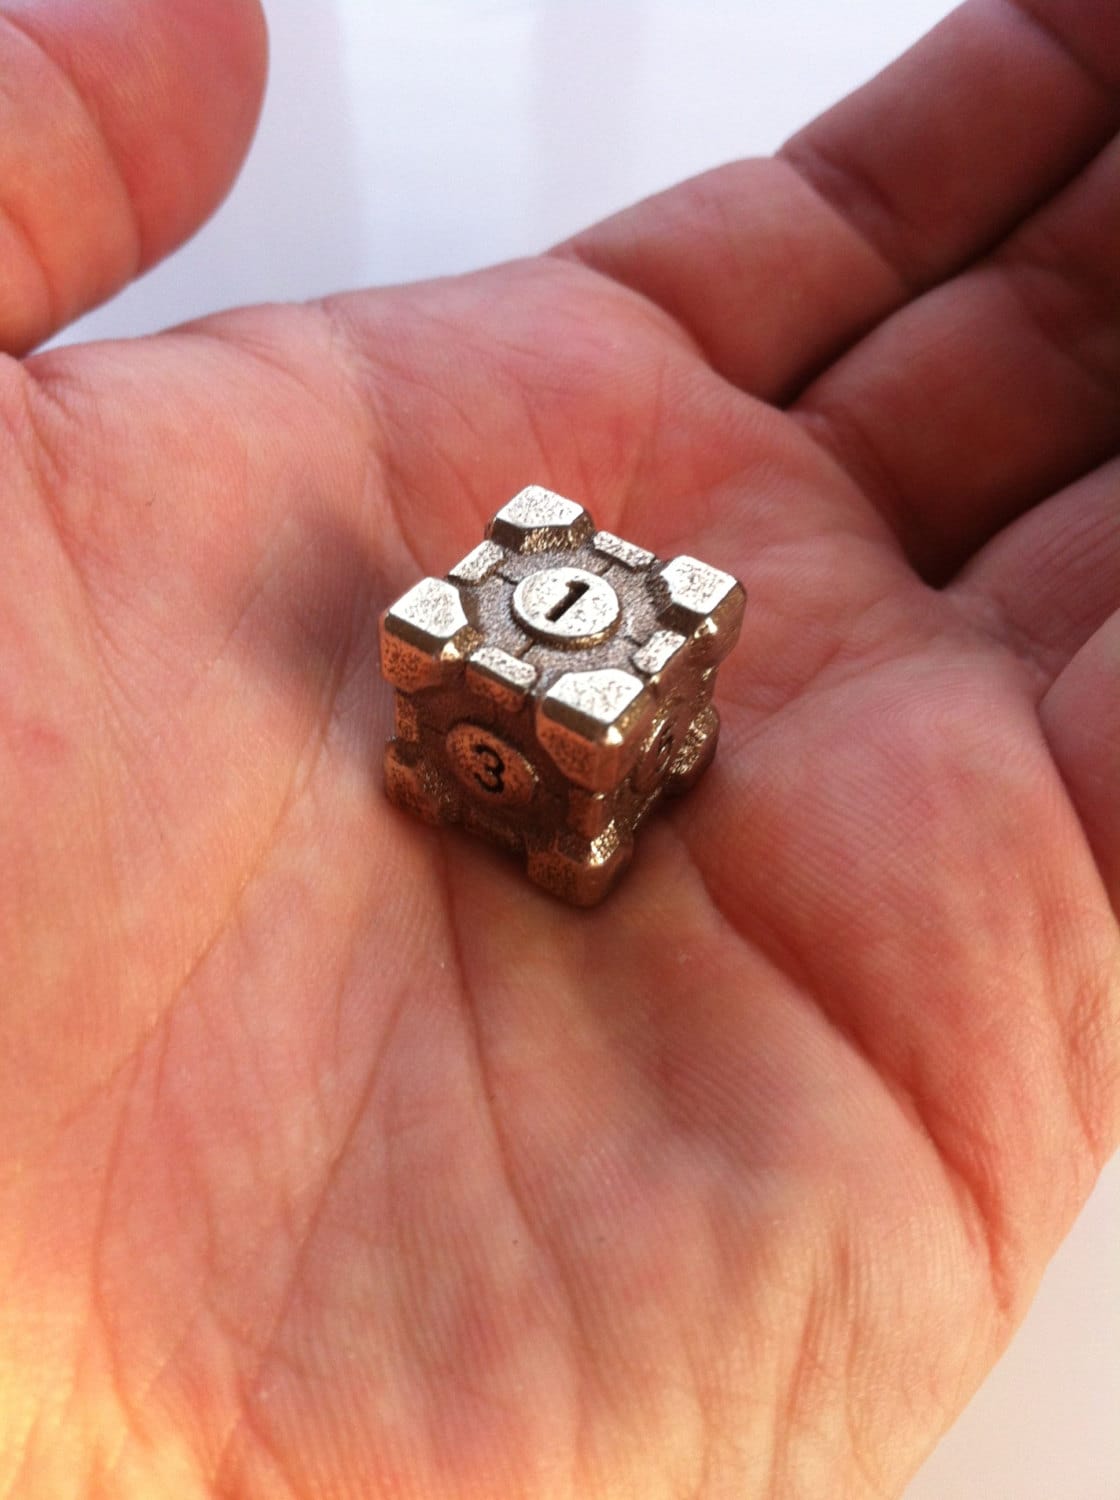 Companion Cube dice